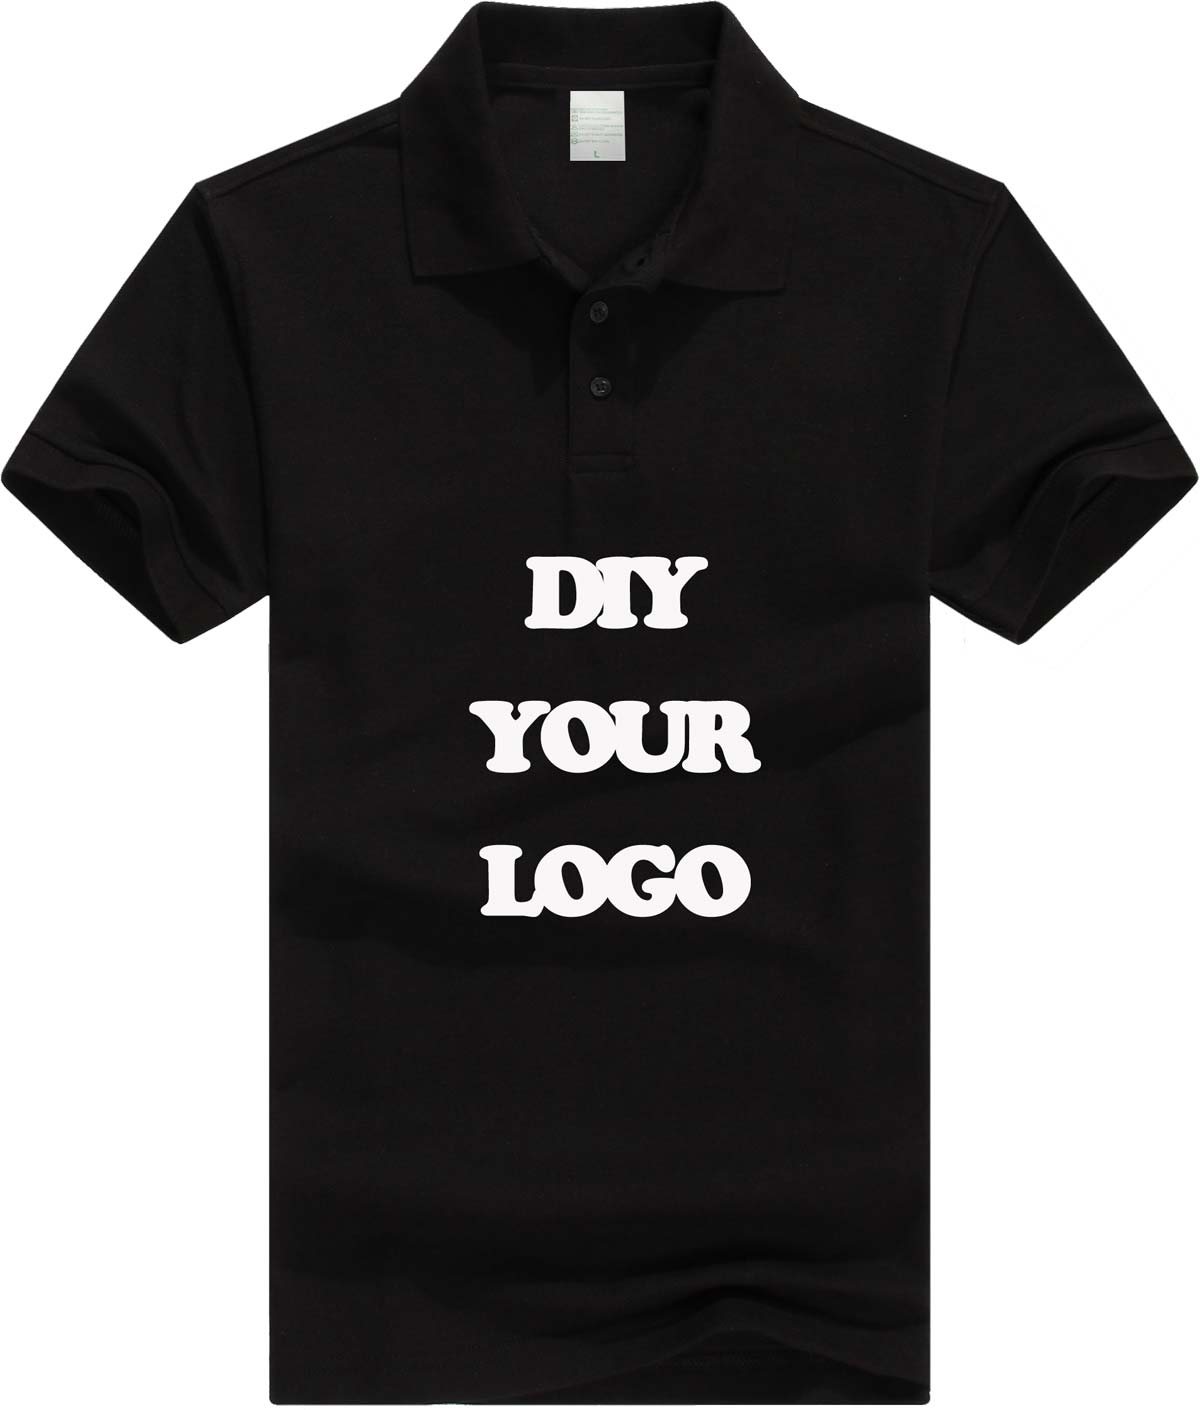 Work shirts with Logos